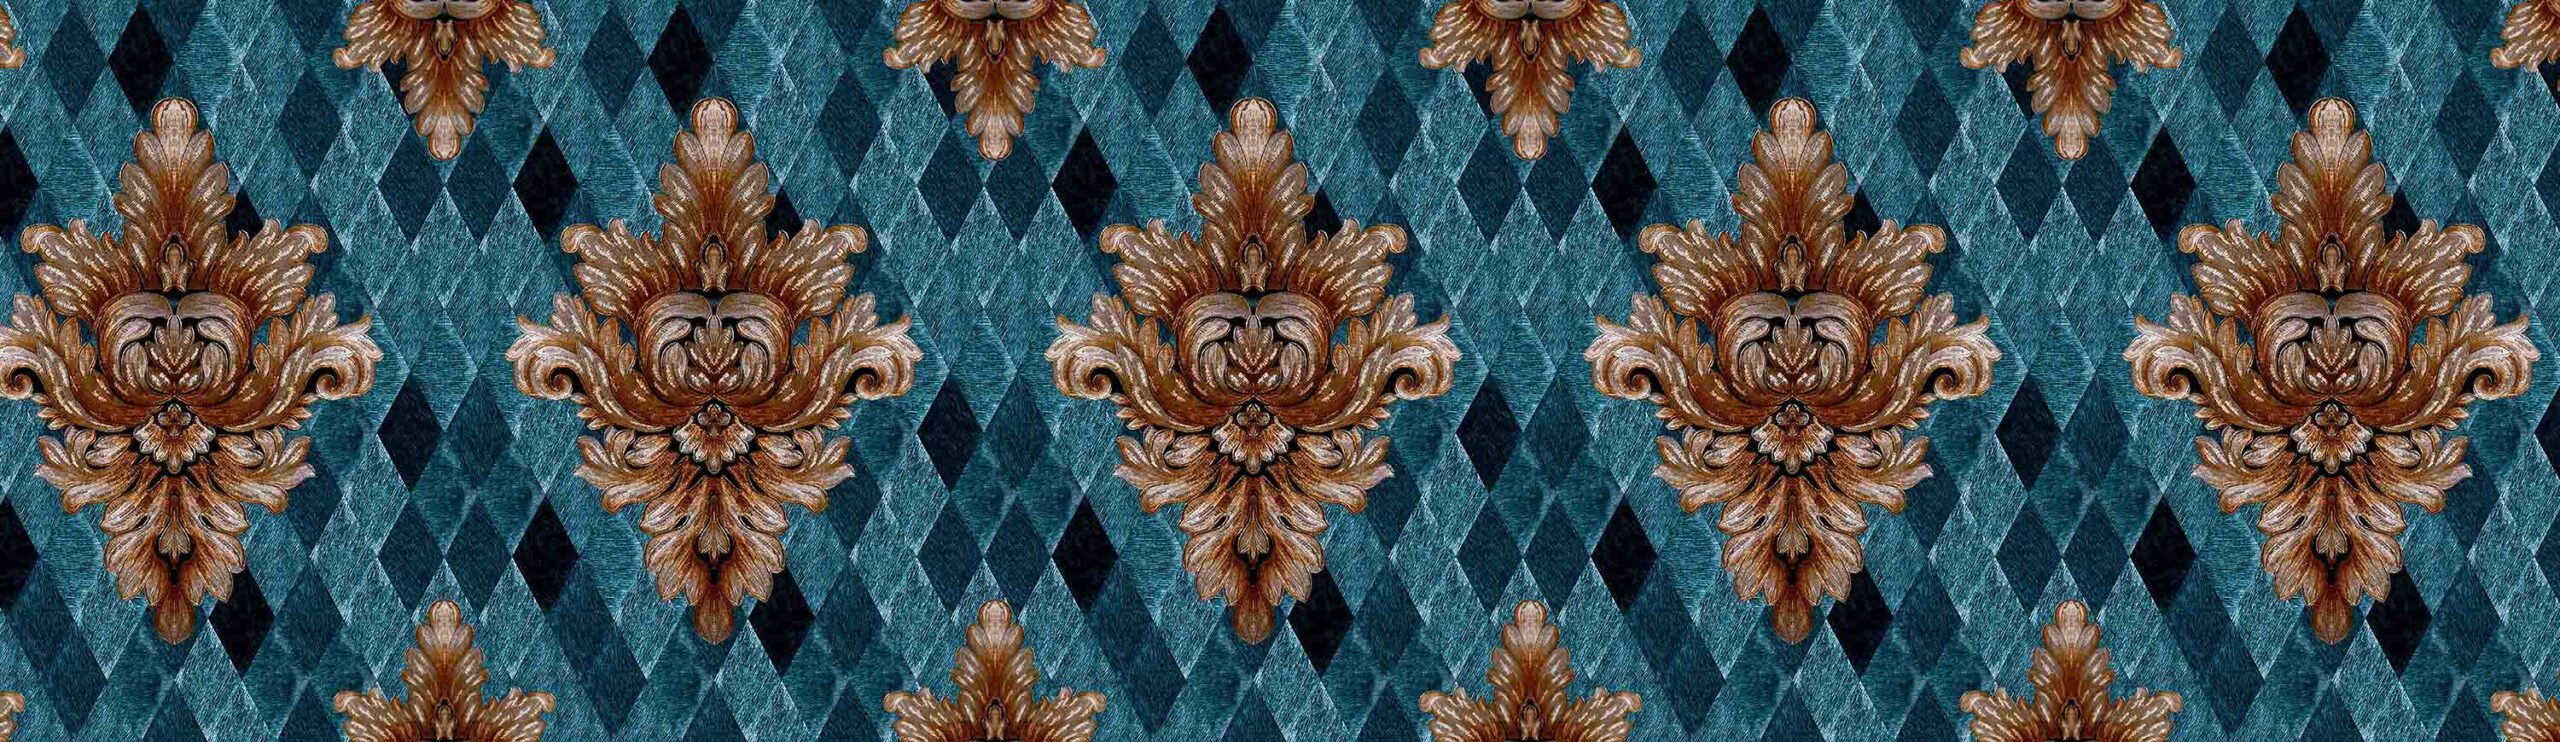 Decorative Tile Floral Texture Rustic Wallpaper Border